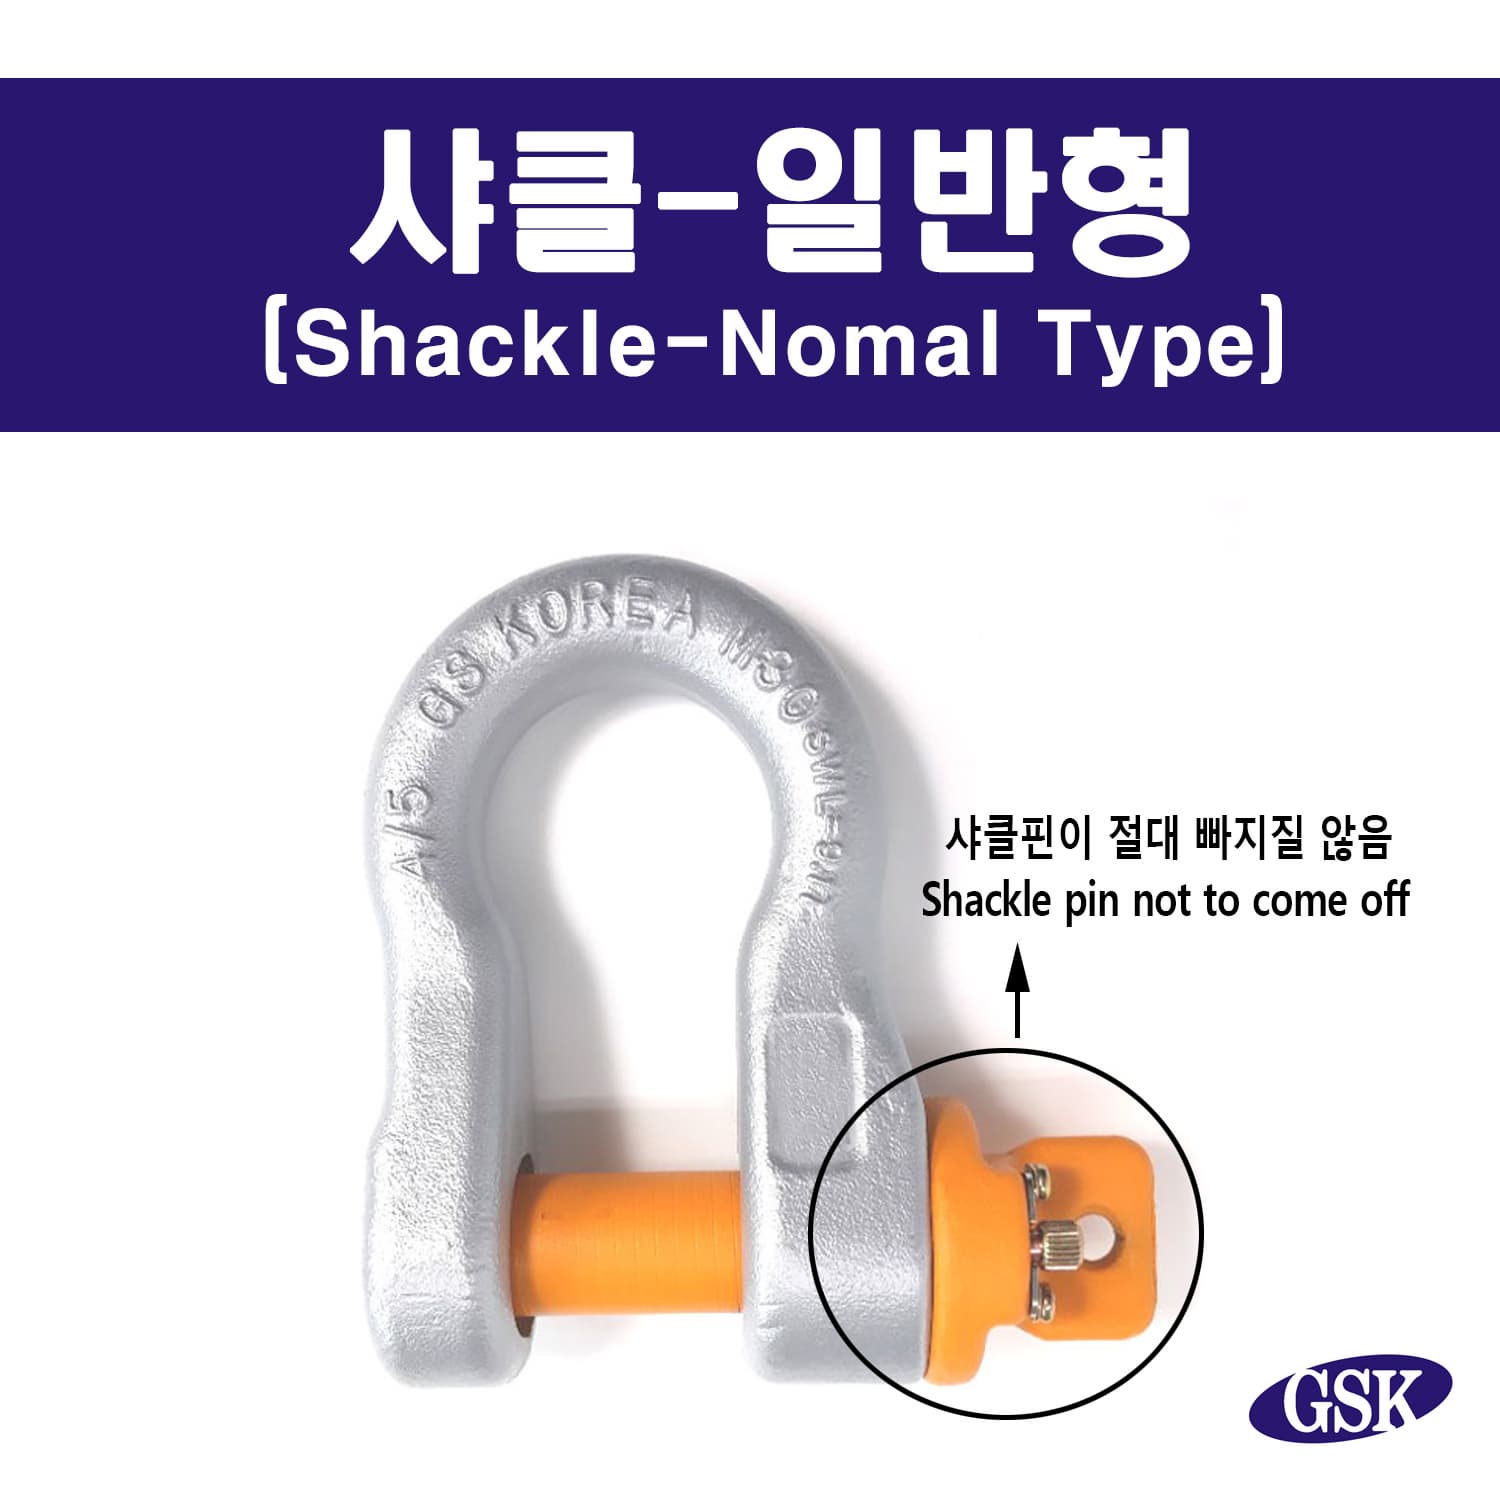 GSK KOREA LOCK SHACKLE